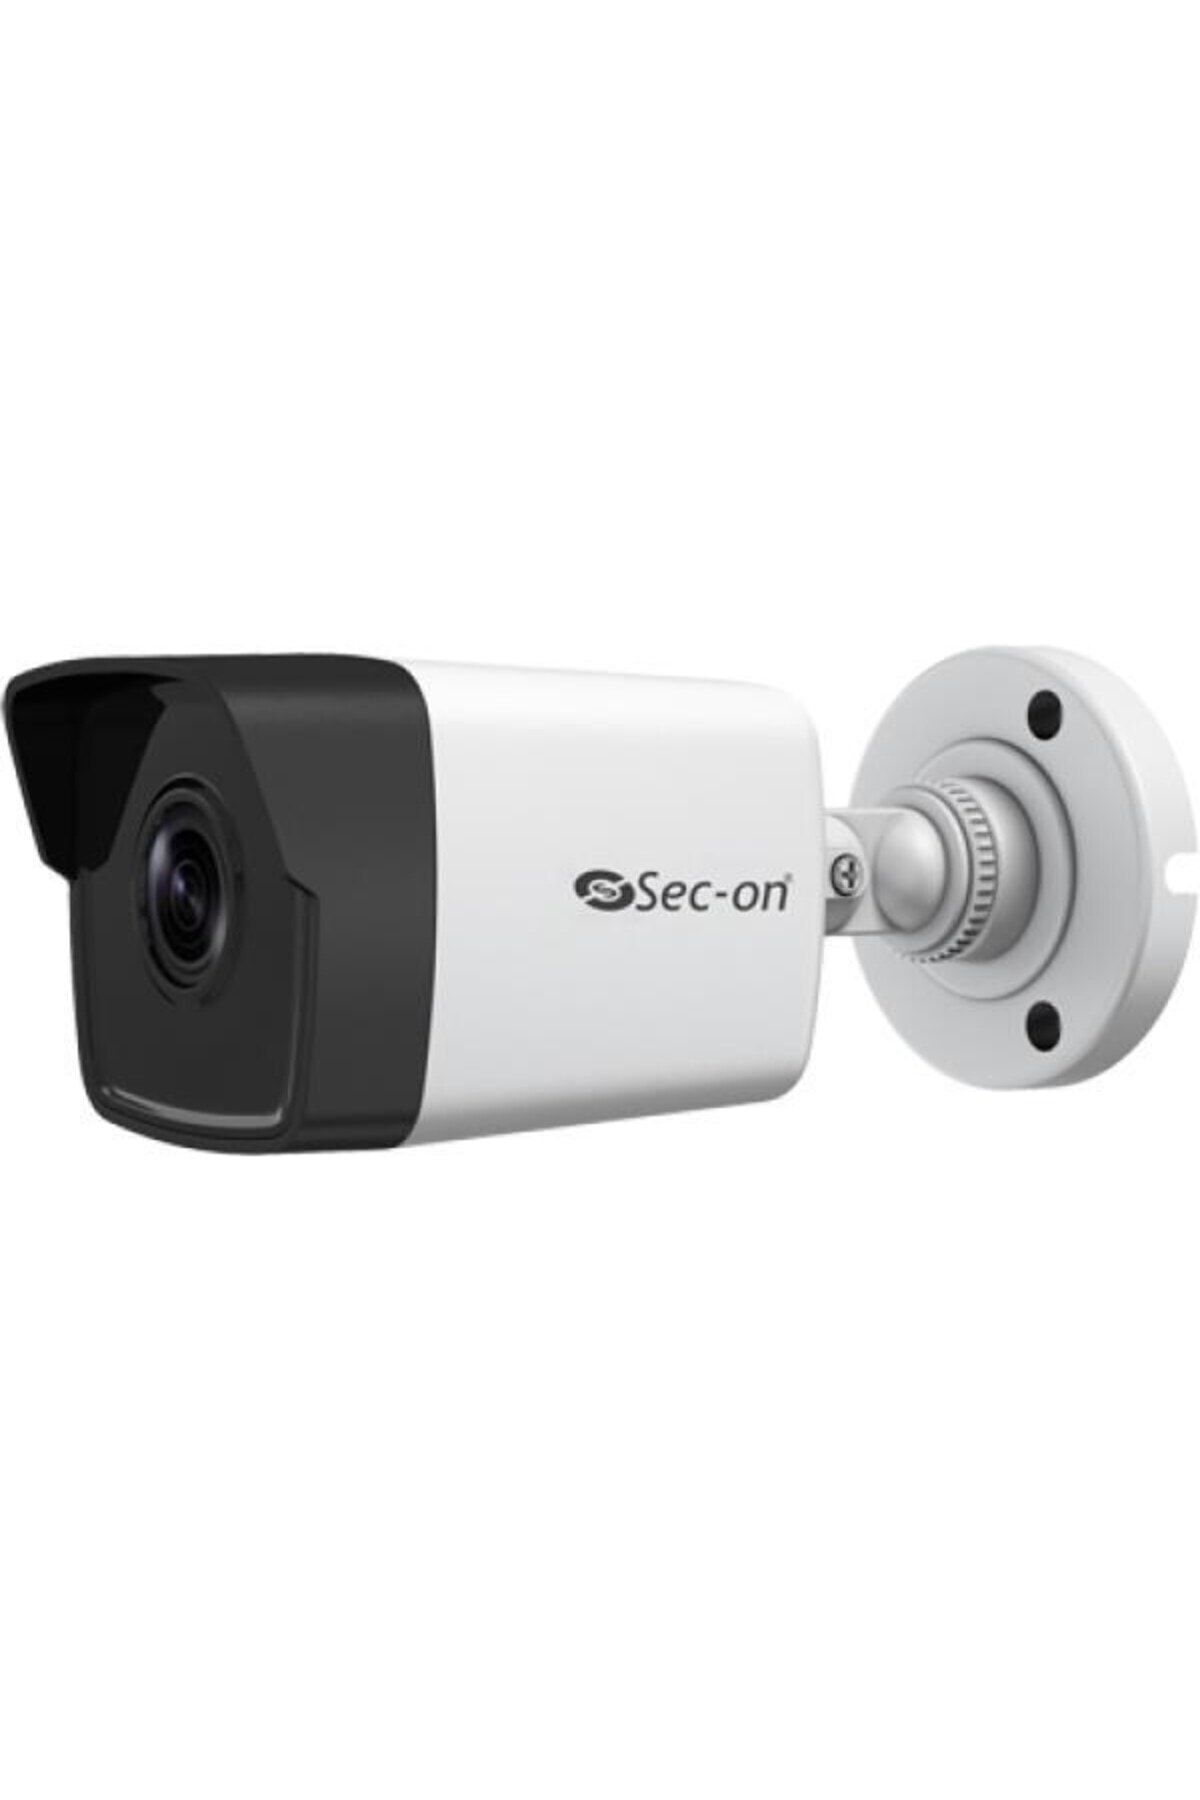 Sec on SEC-ON SC-BF2302-S 2MP IP Bullet Network Güvenlik Kamerası